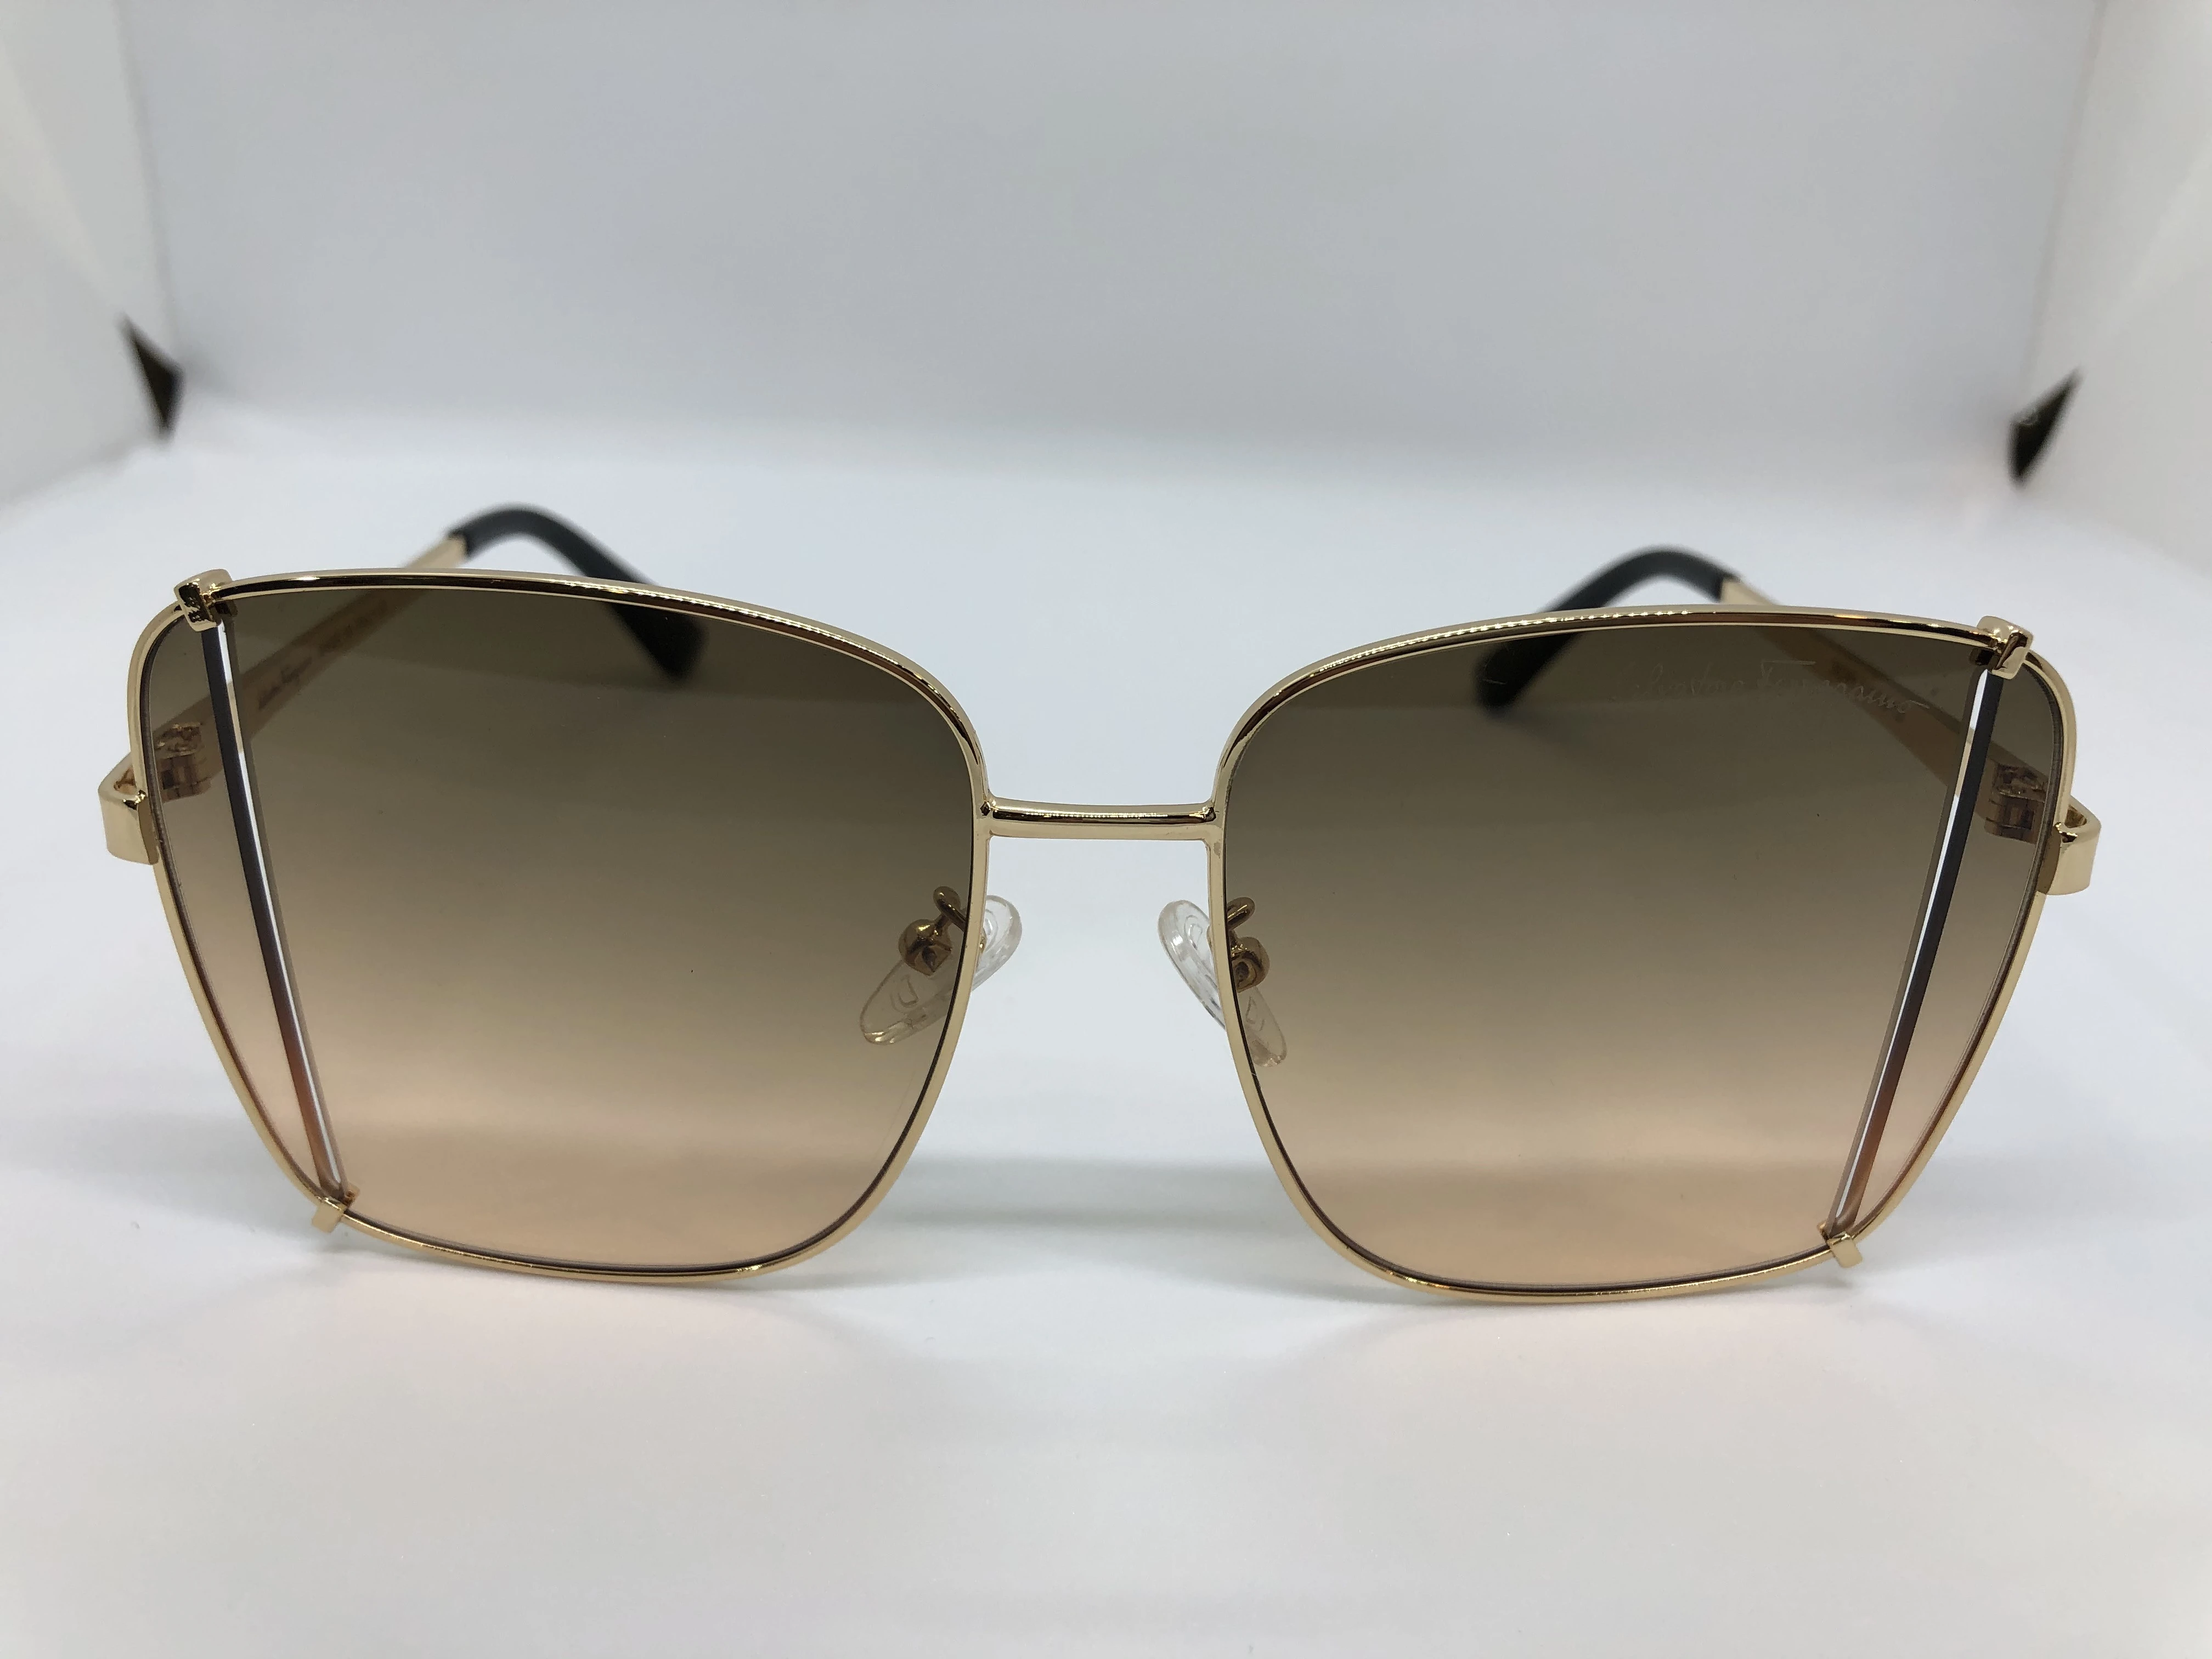 Sunglasses - from Salvatore Ferragamo - golden metal frame - transparent golden lenses - golden metal arm - for women